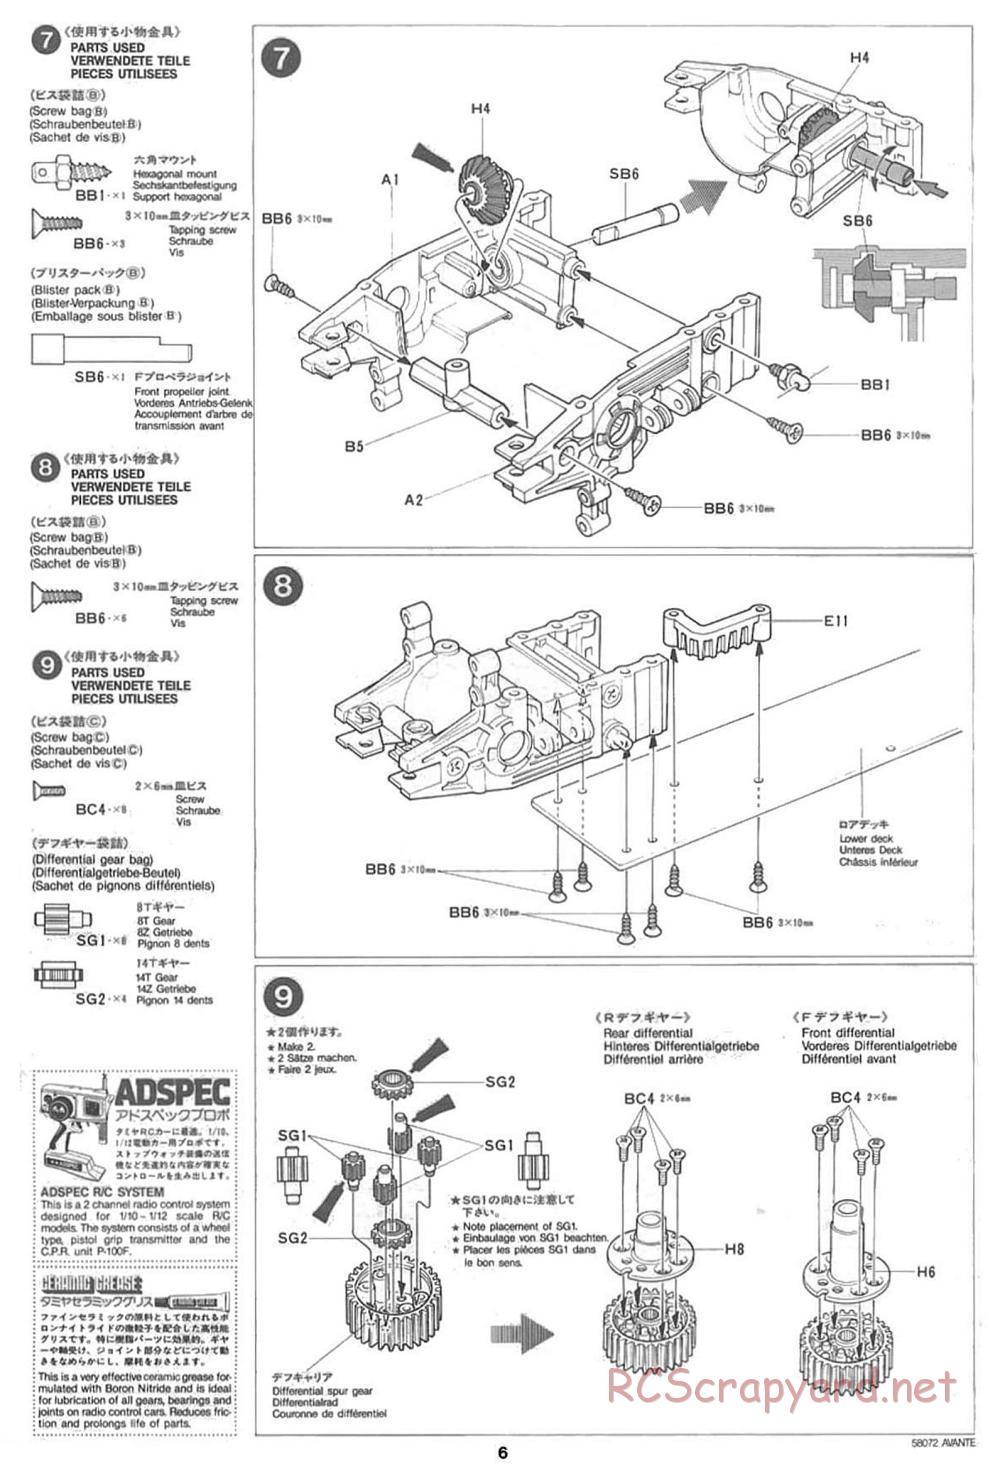 Tamiya - Avante - 58072 - Manual - Page 6